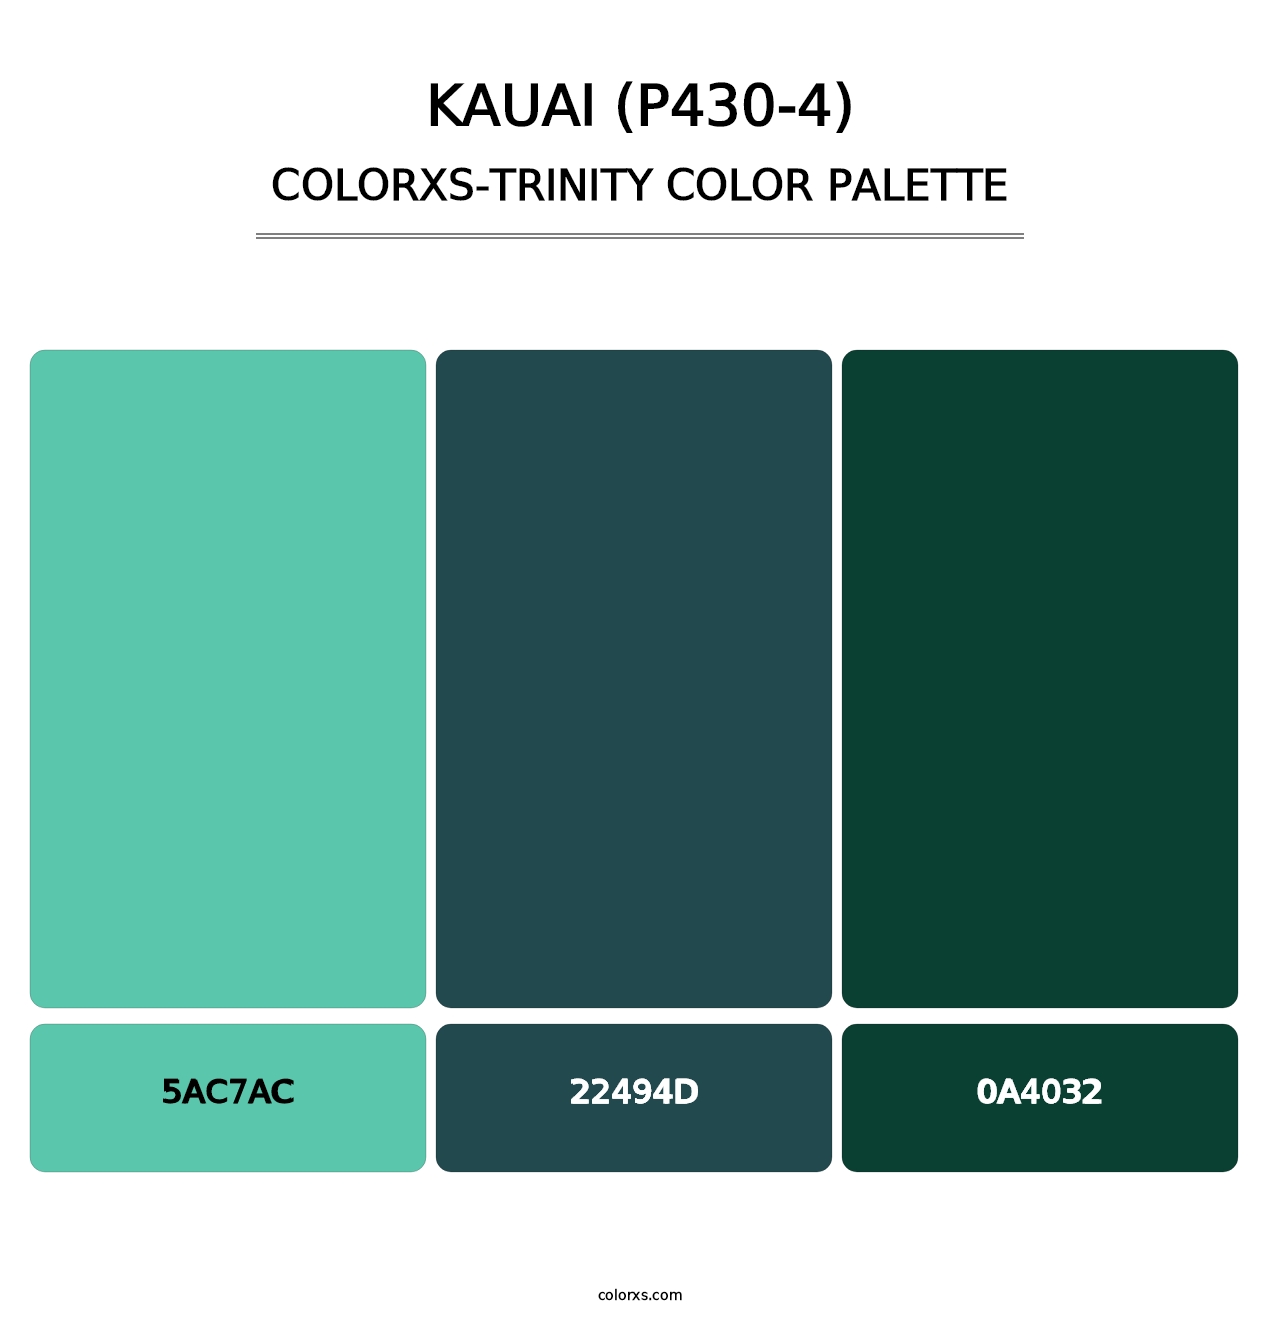 Kauai (P430-4) - Colorxs Trinity Palette